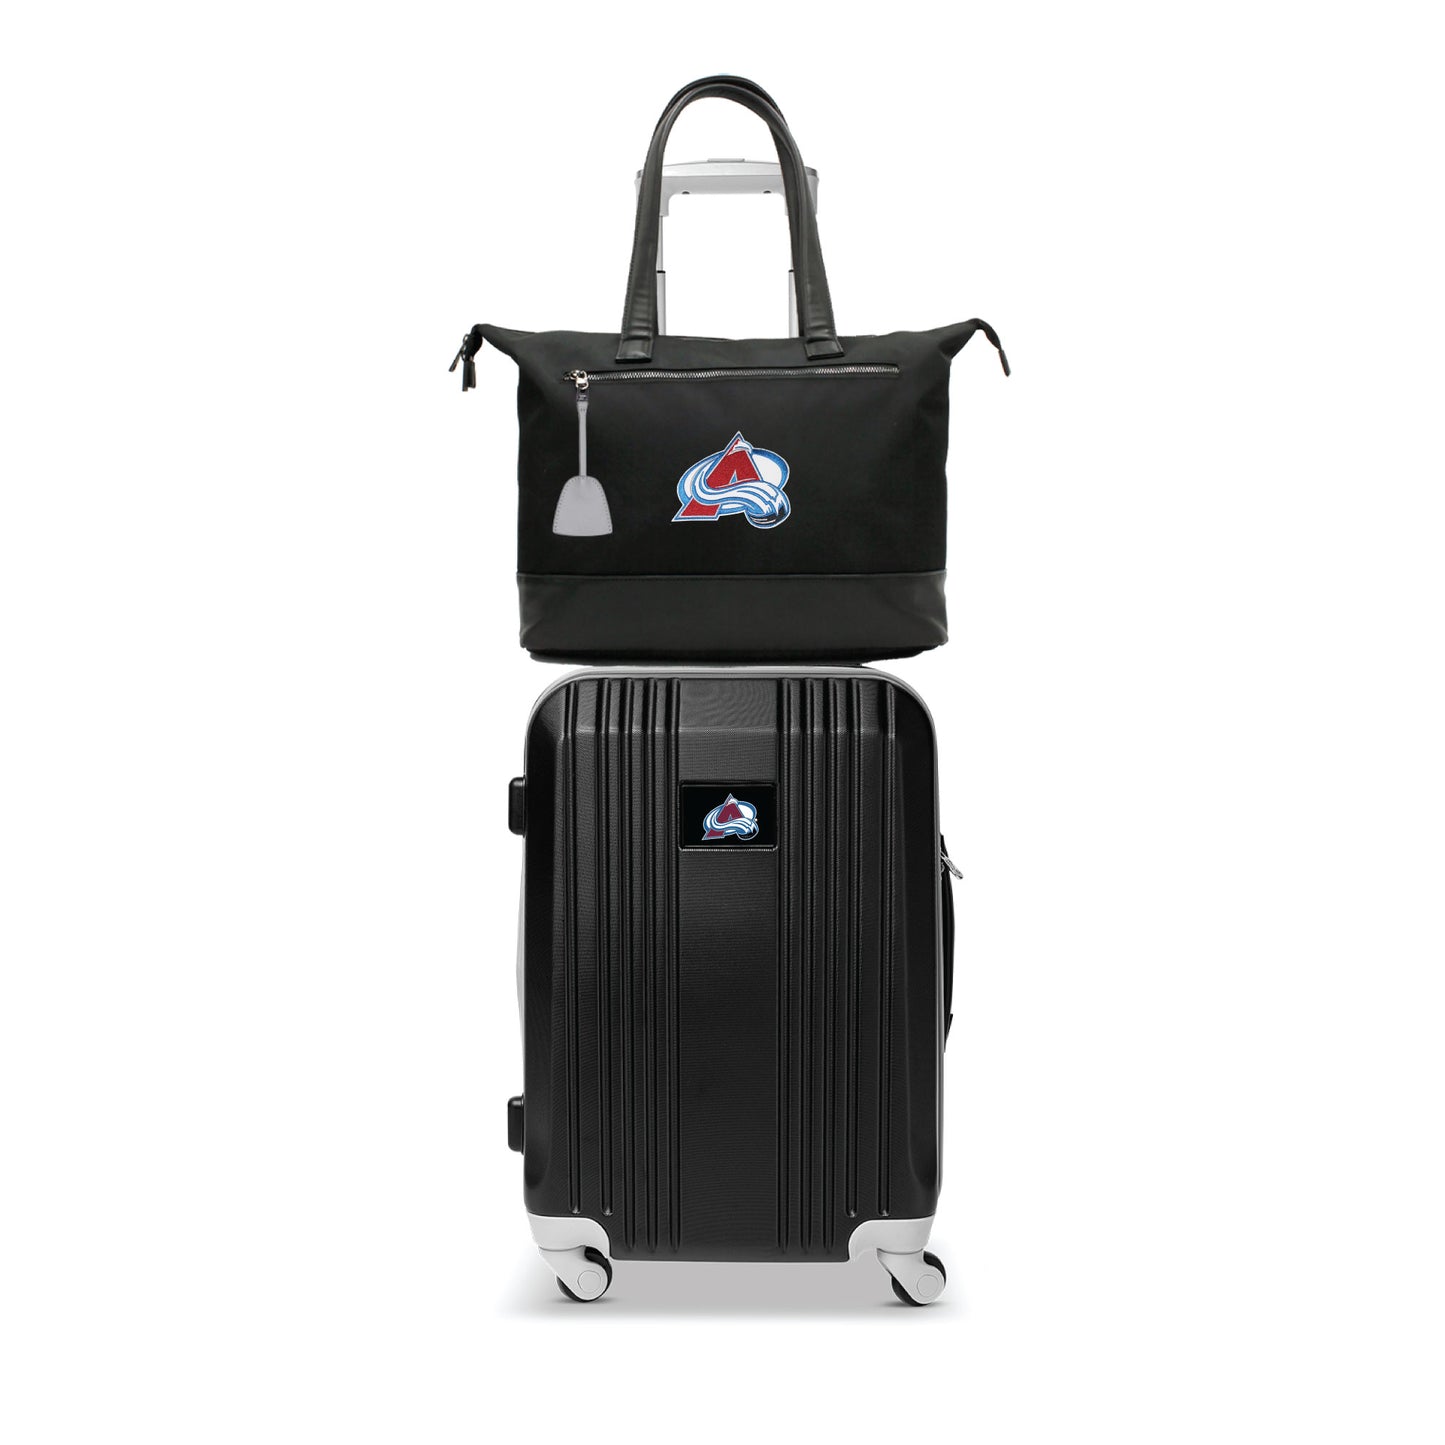 Colorado Avalanche Premium Laptop Tote Bag and Luggage Set